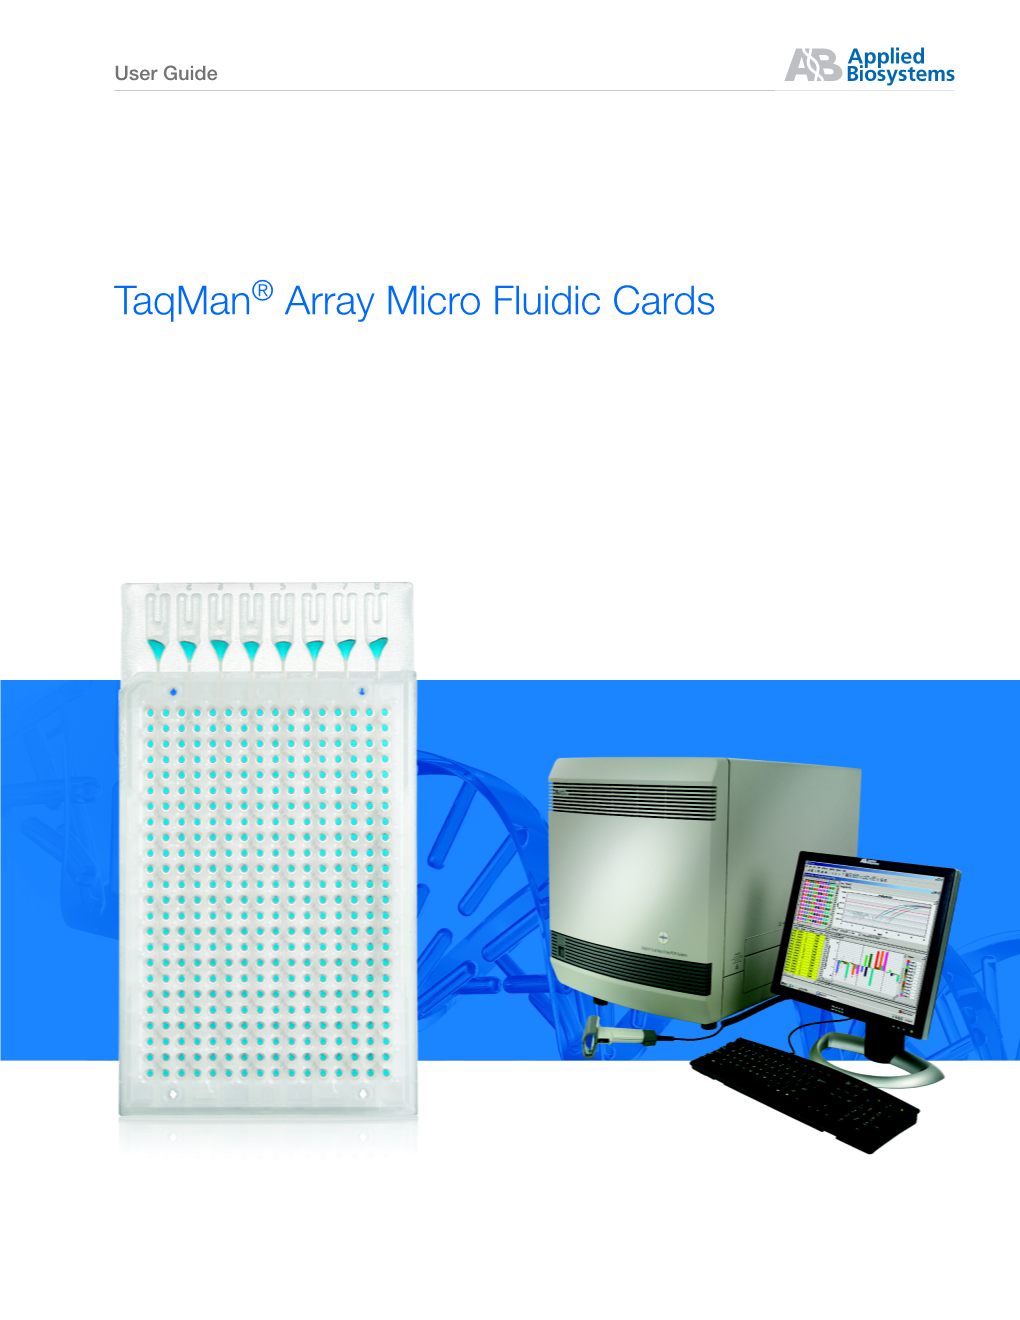 User Guide: Taqman® Array Micro Fluidic Cards